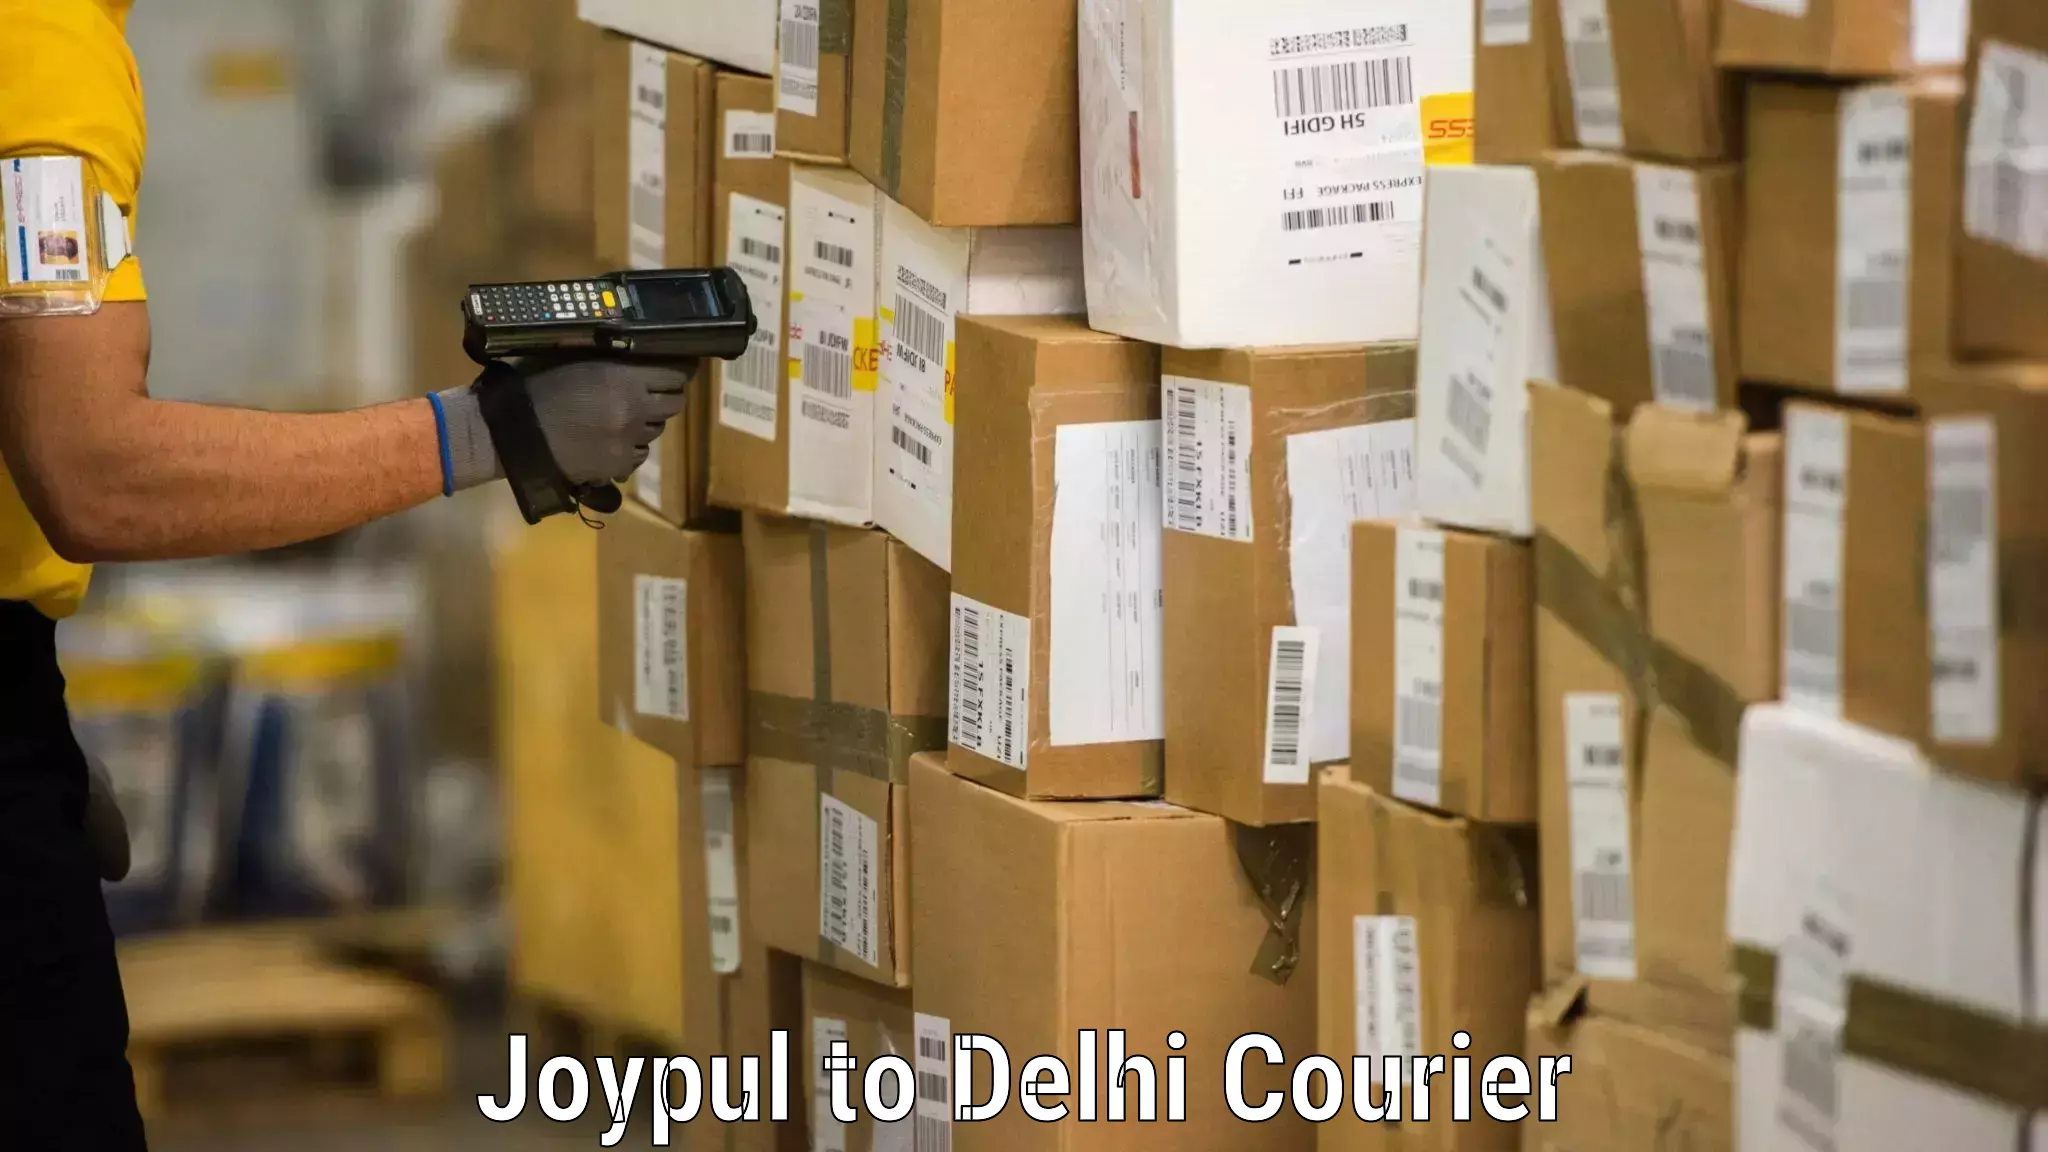 Professional moving company Joypul to Delhi